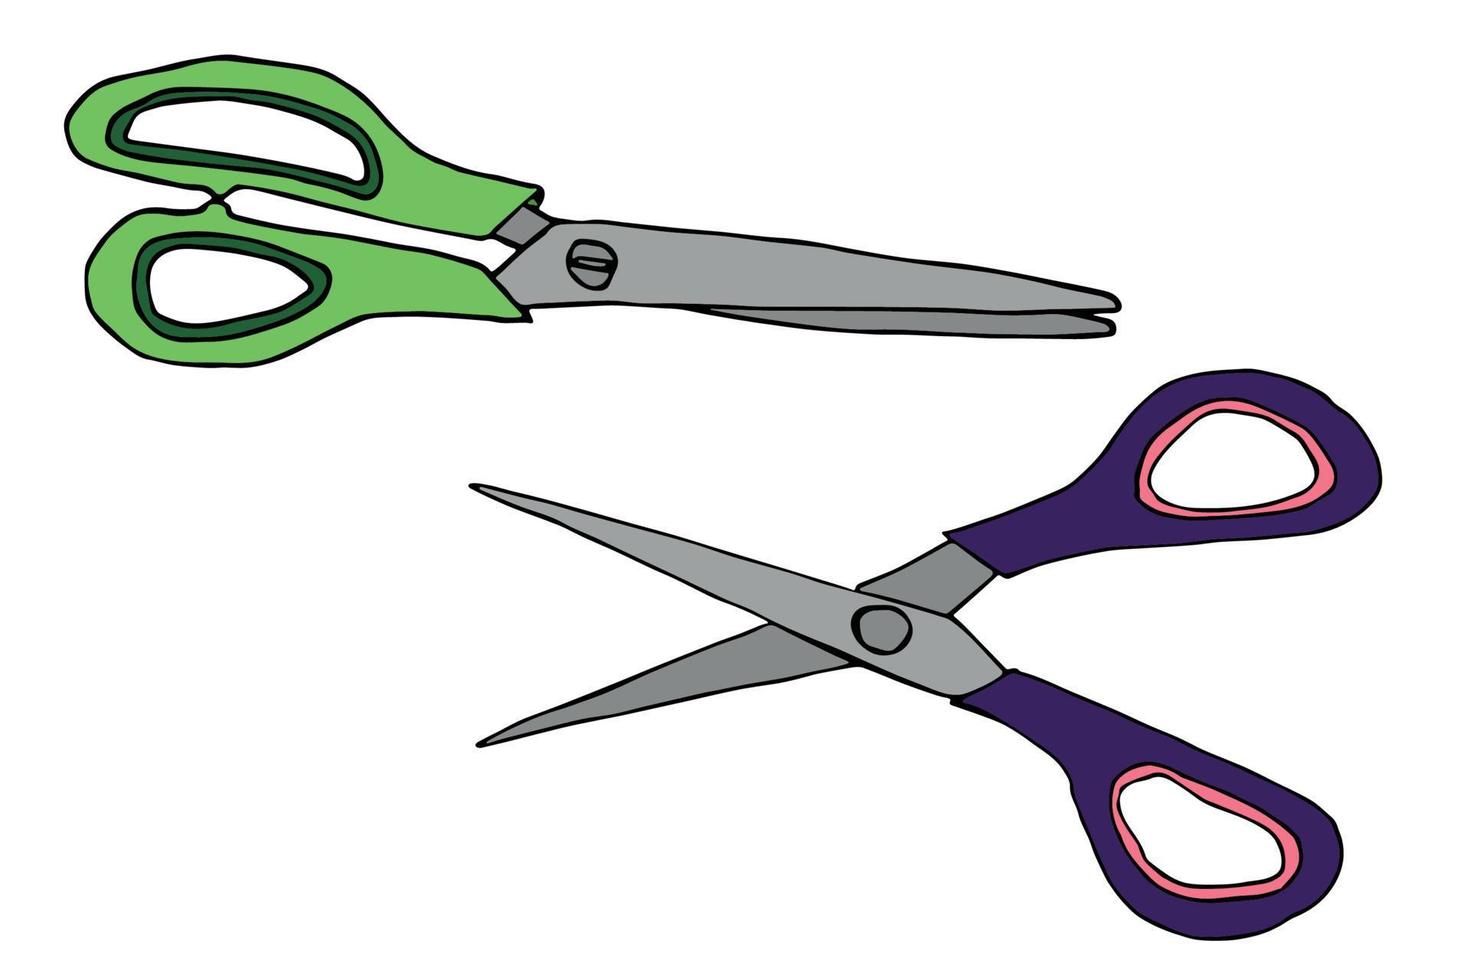 Vector scissors clipart. Hand drawn office supplies illustration. For print, web, design, decor, logo.